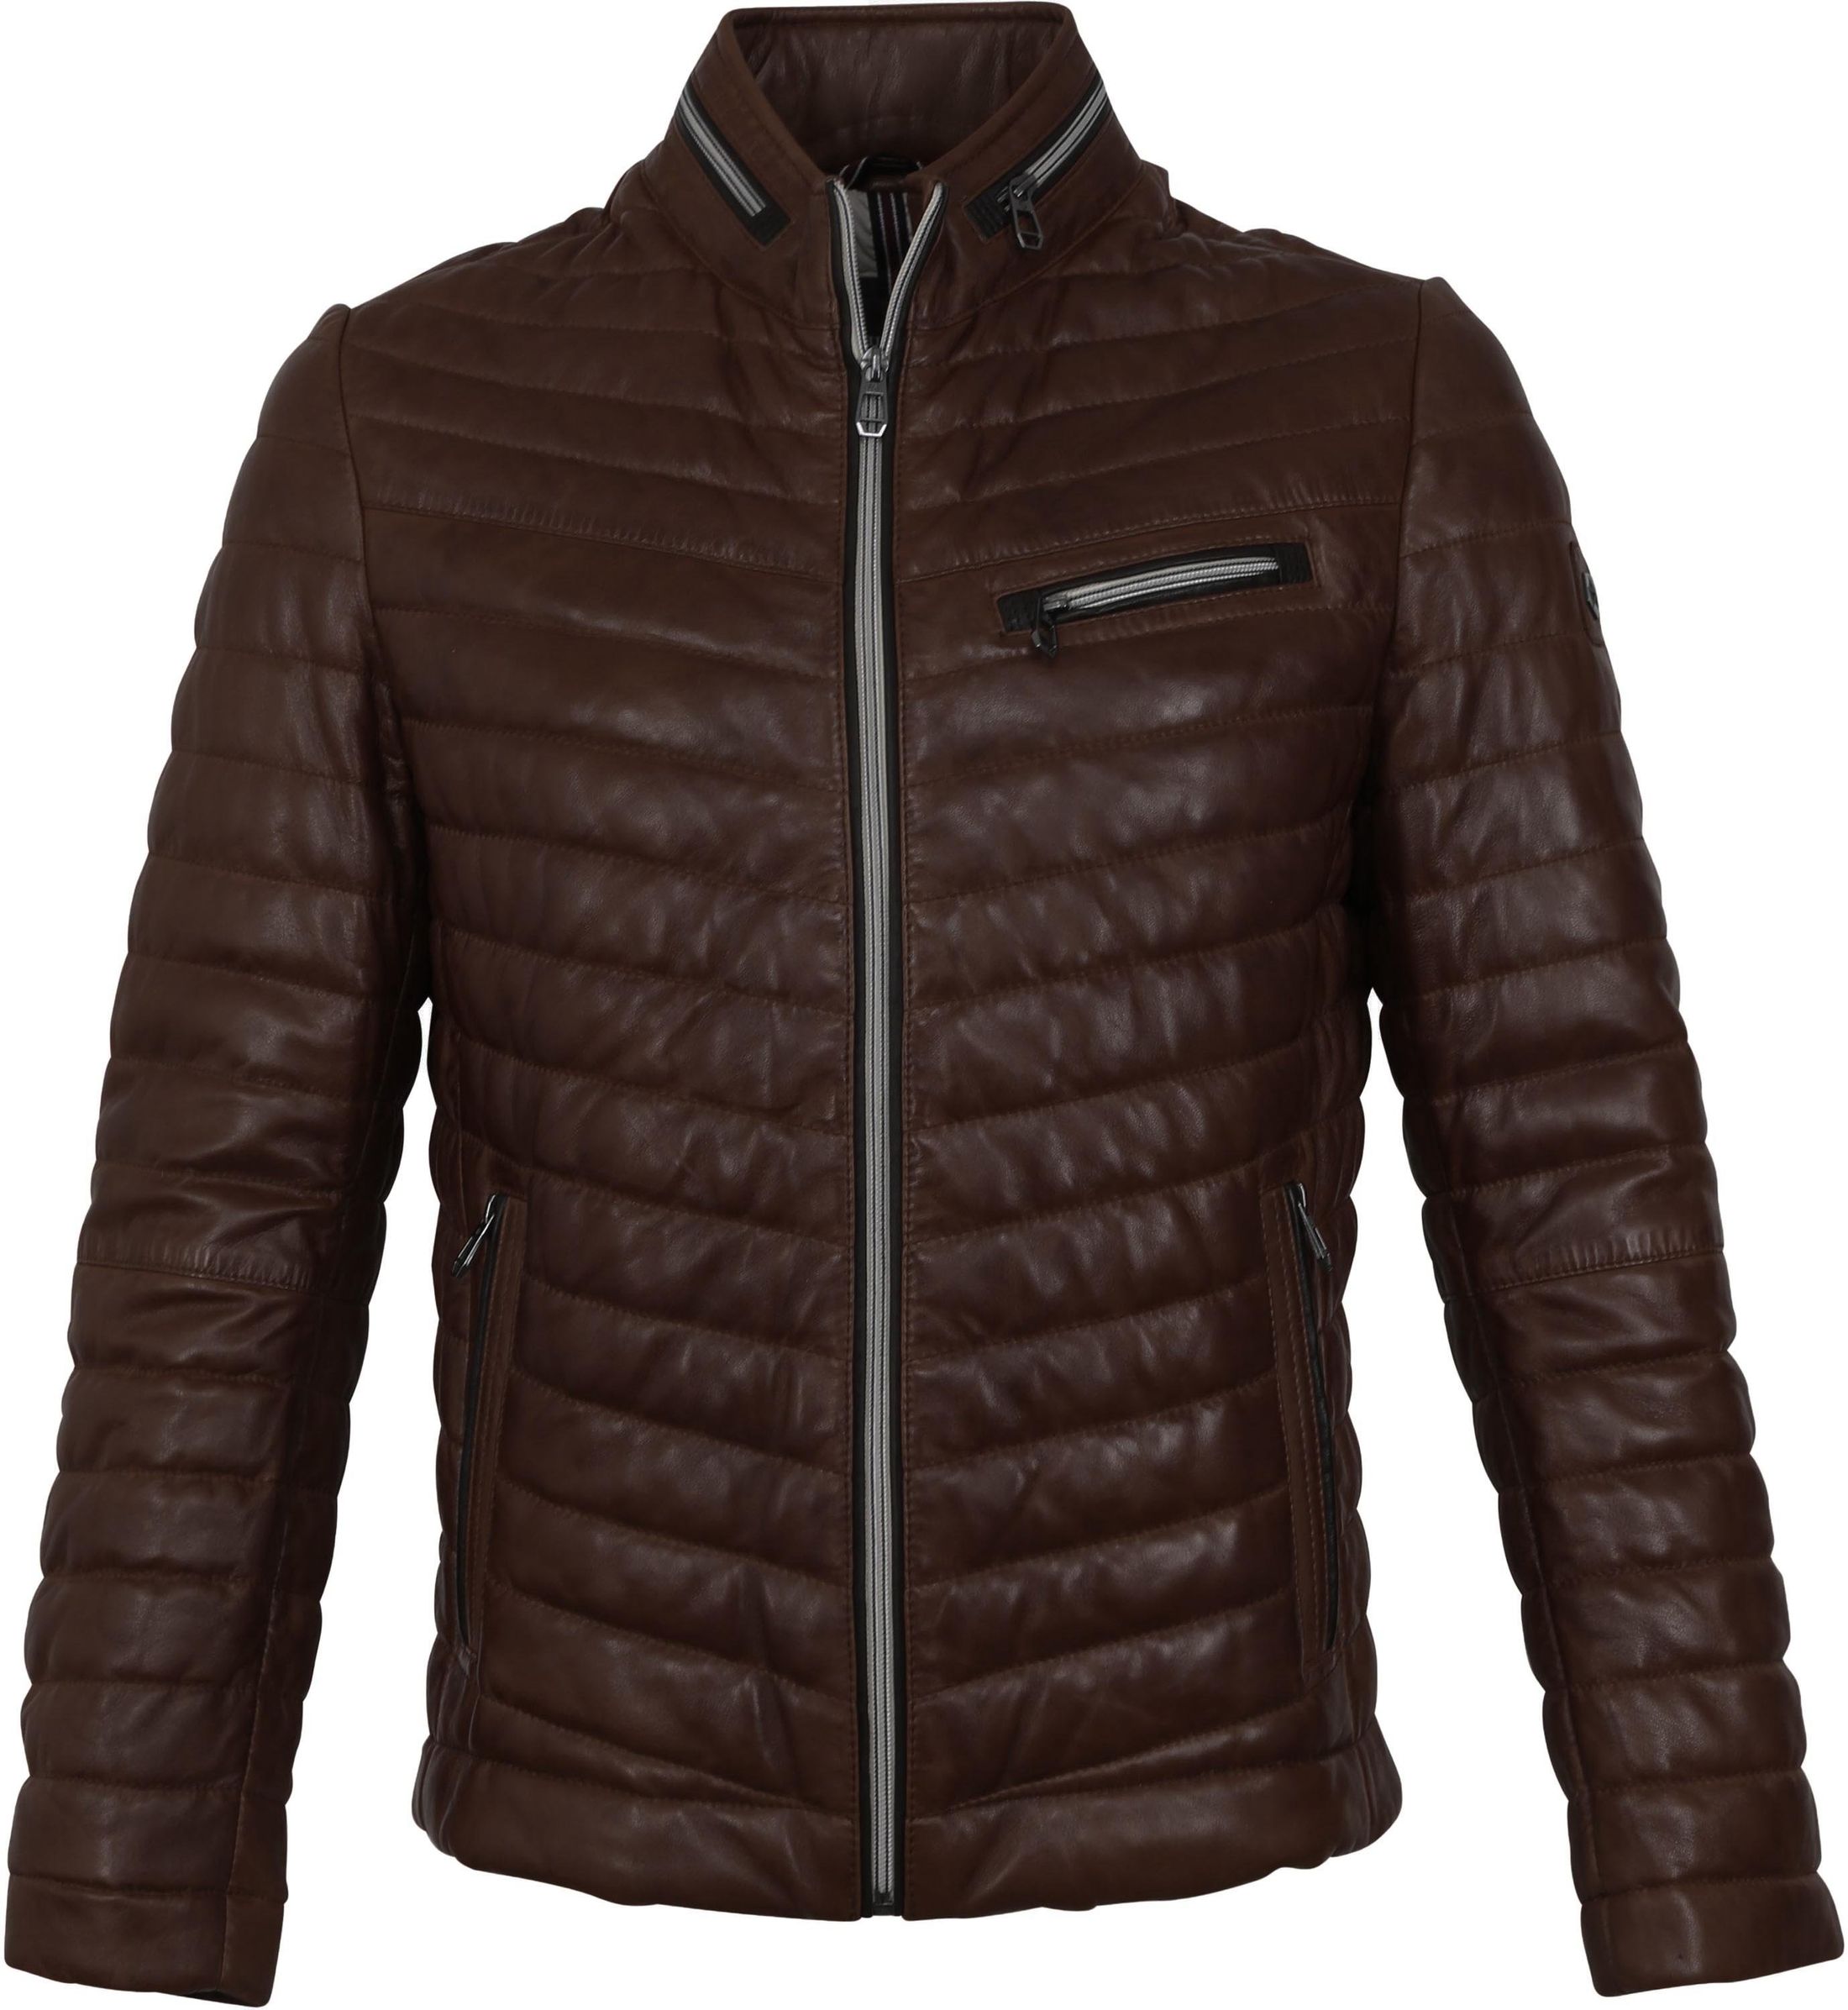 Milestone Damiano Leather Dark Jacket Brown size 38-R